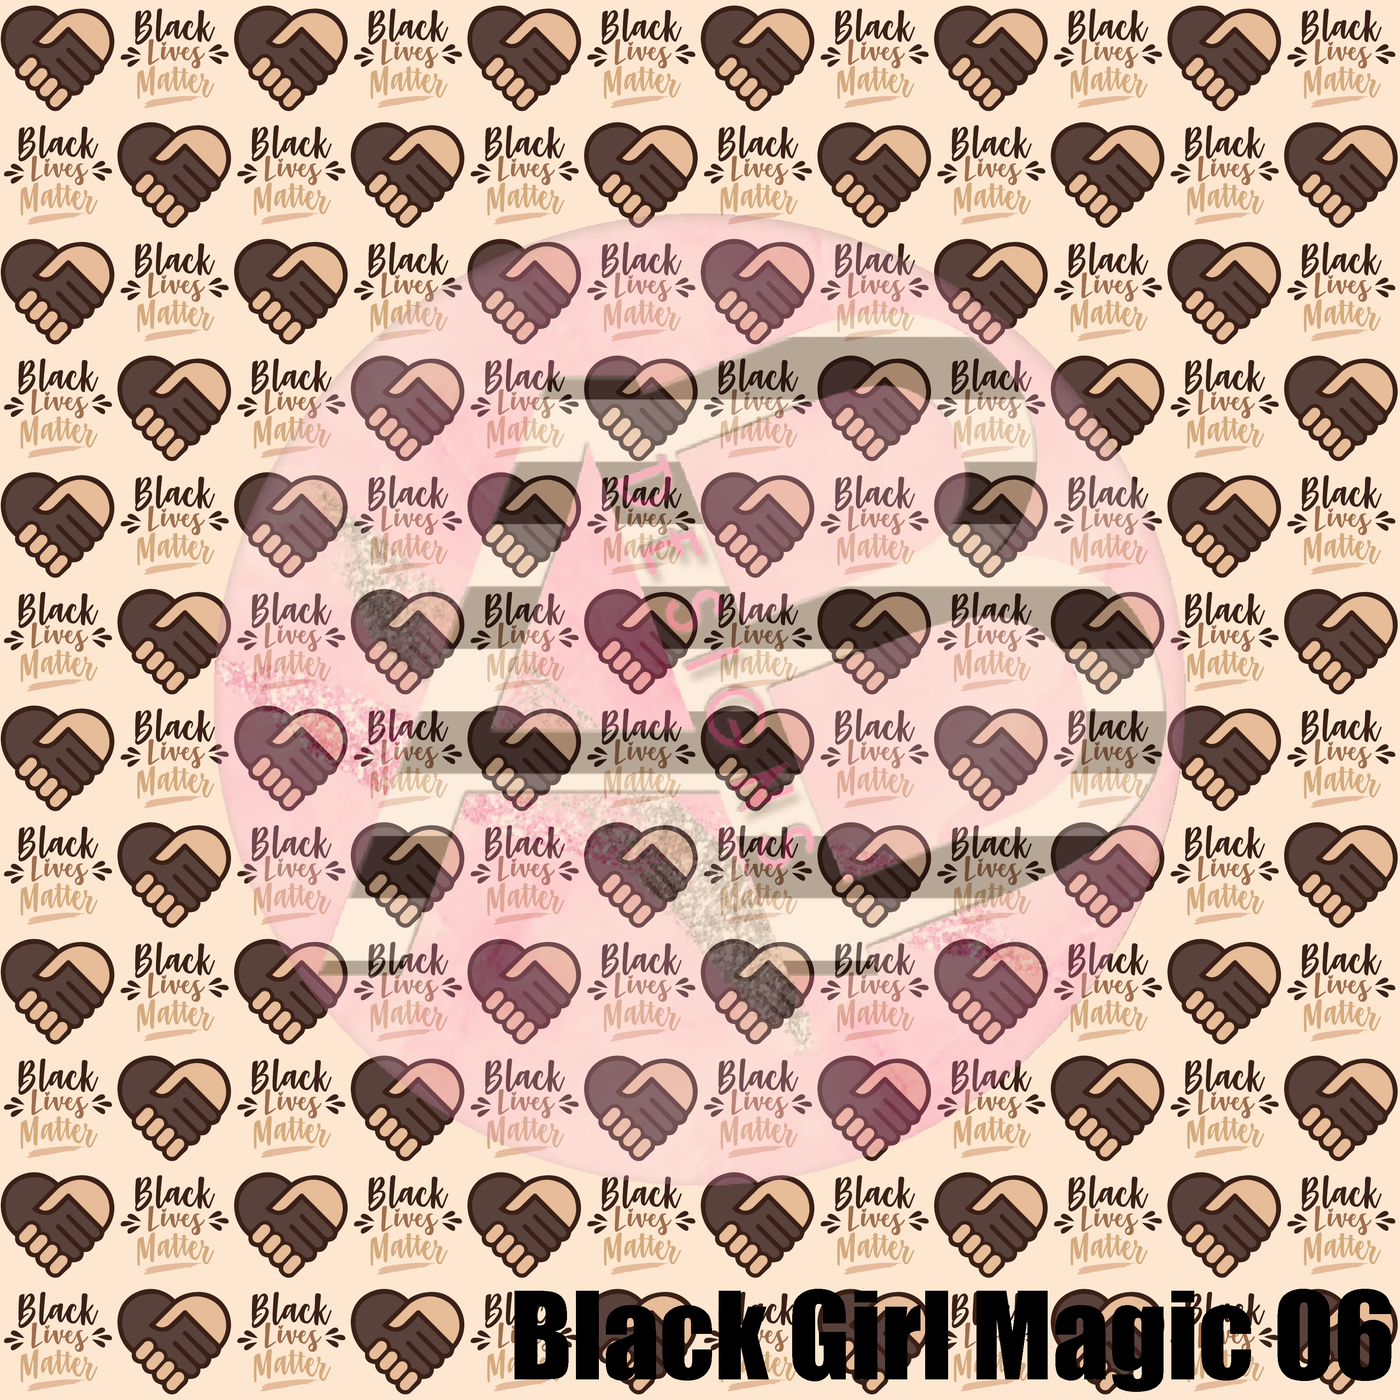 Adhesive Patterned Vinyl - Black Girl Magic 06